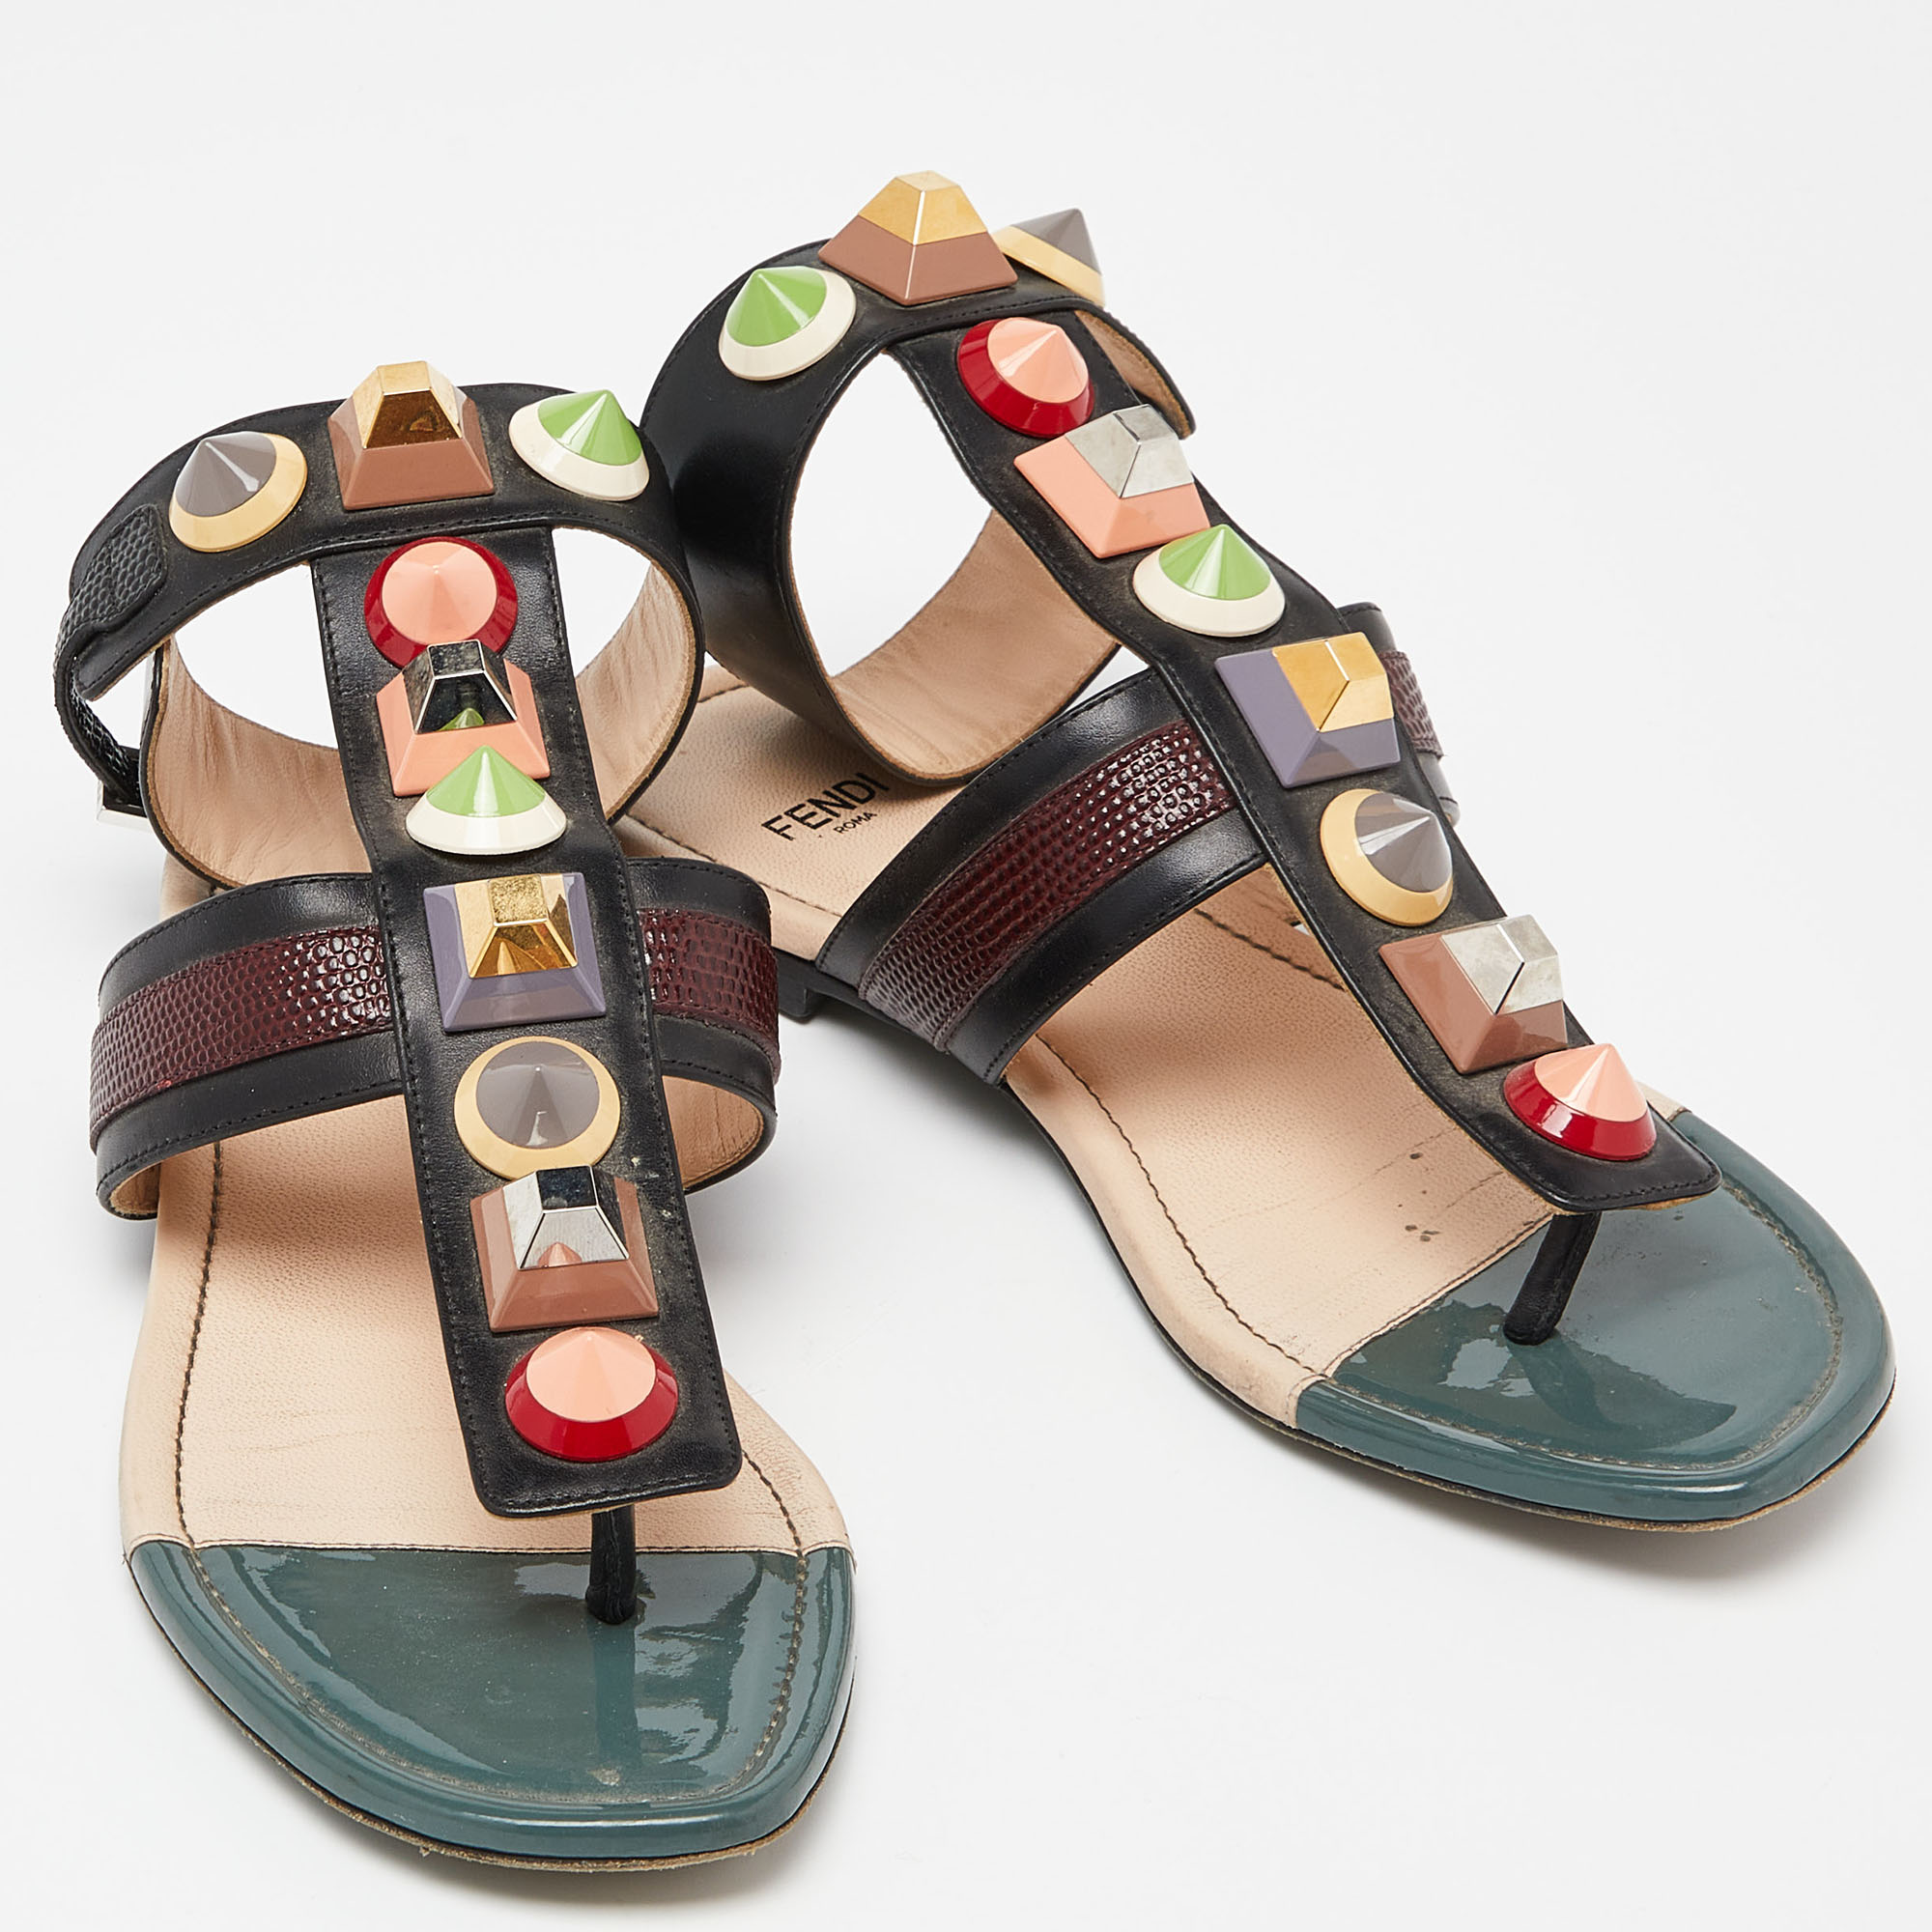 Fendi Multicolor Leather Studded Ankle Strap Flat Sandals Size 35